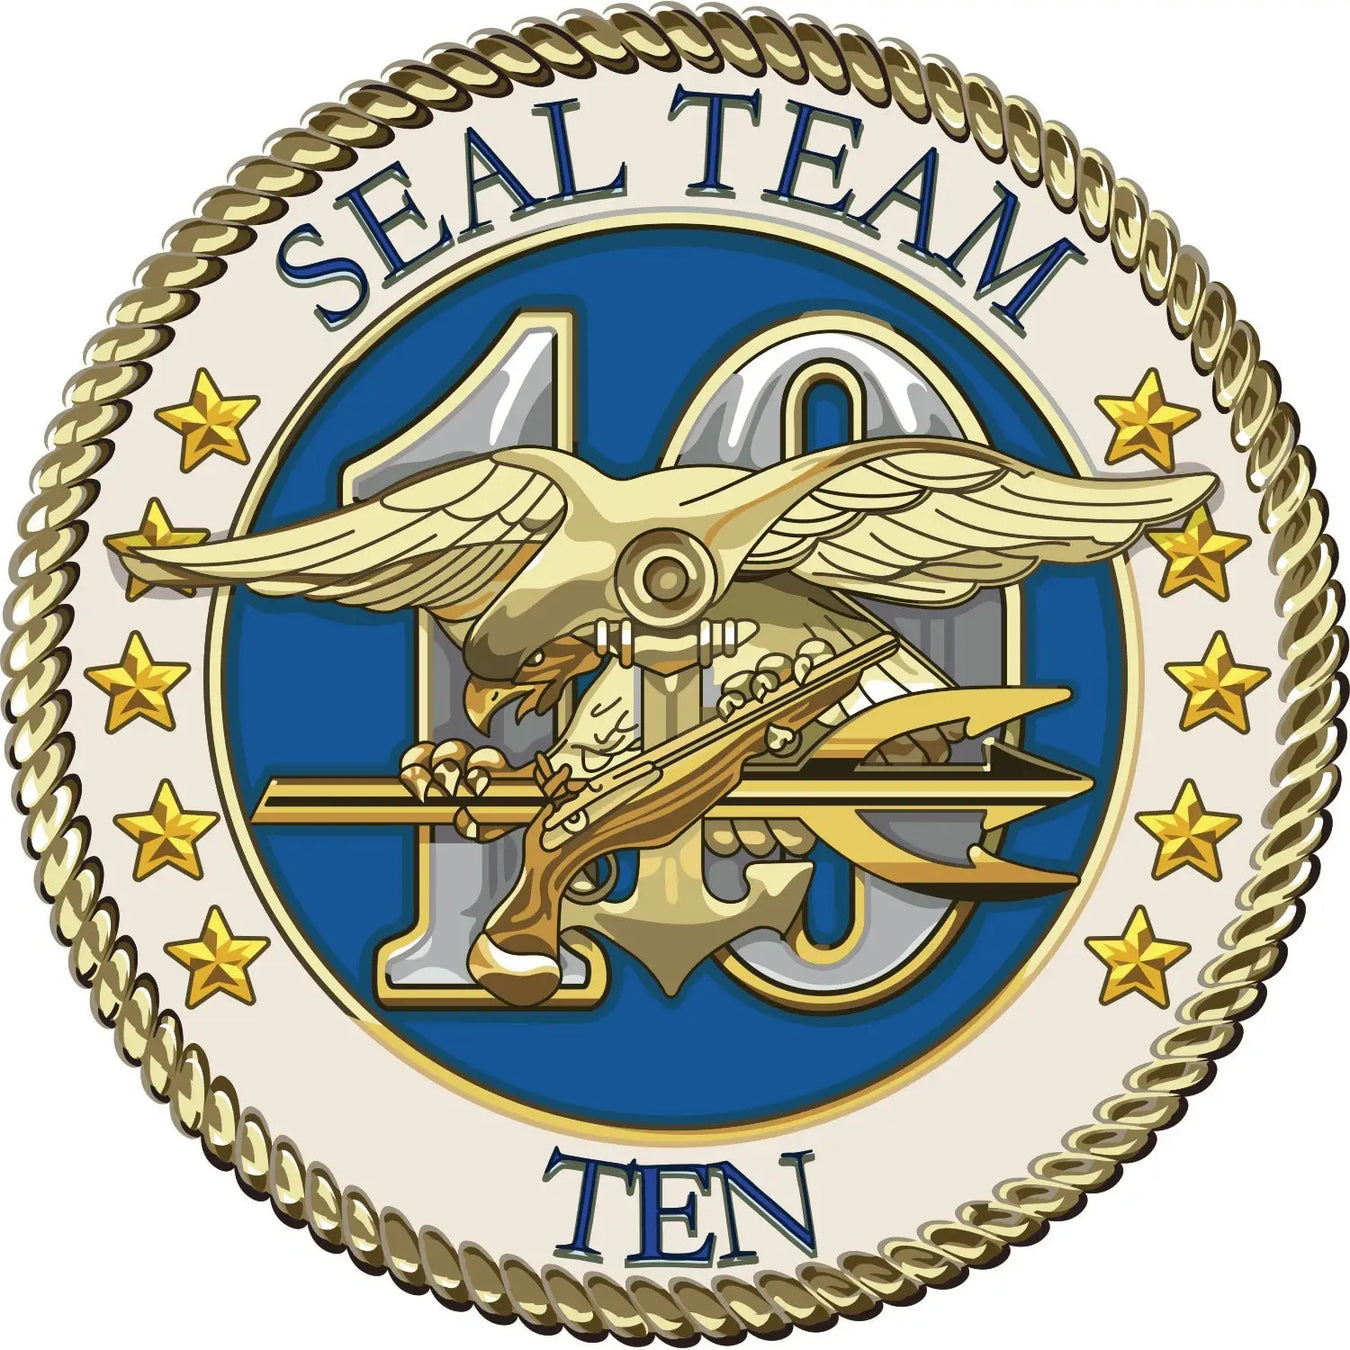 SEAL Team 10 patch logo decal emblem crest insignia